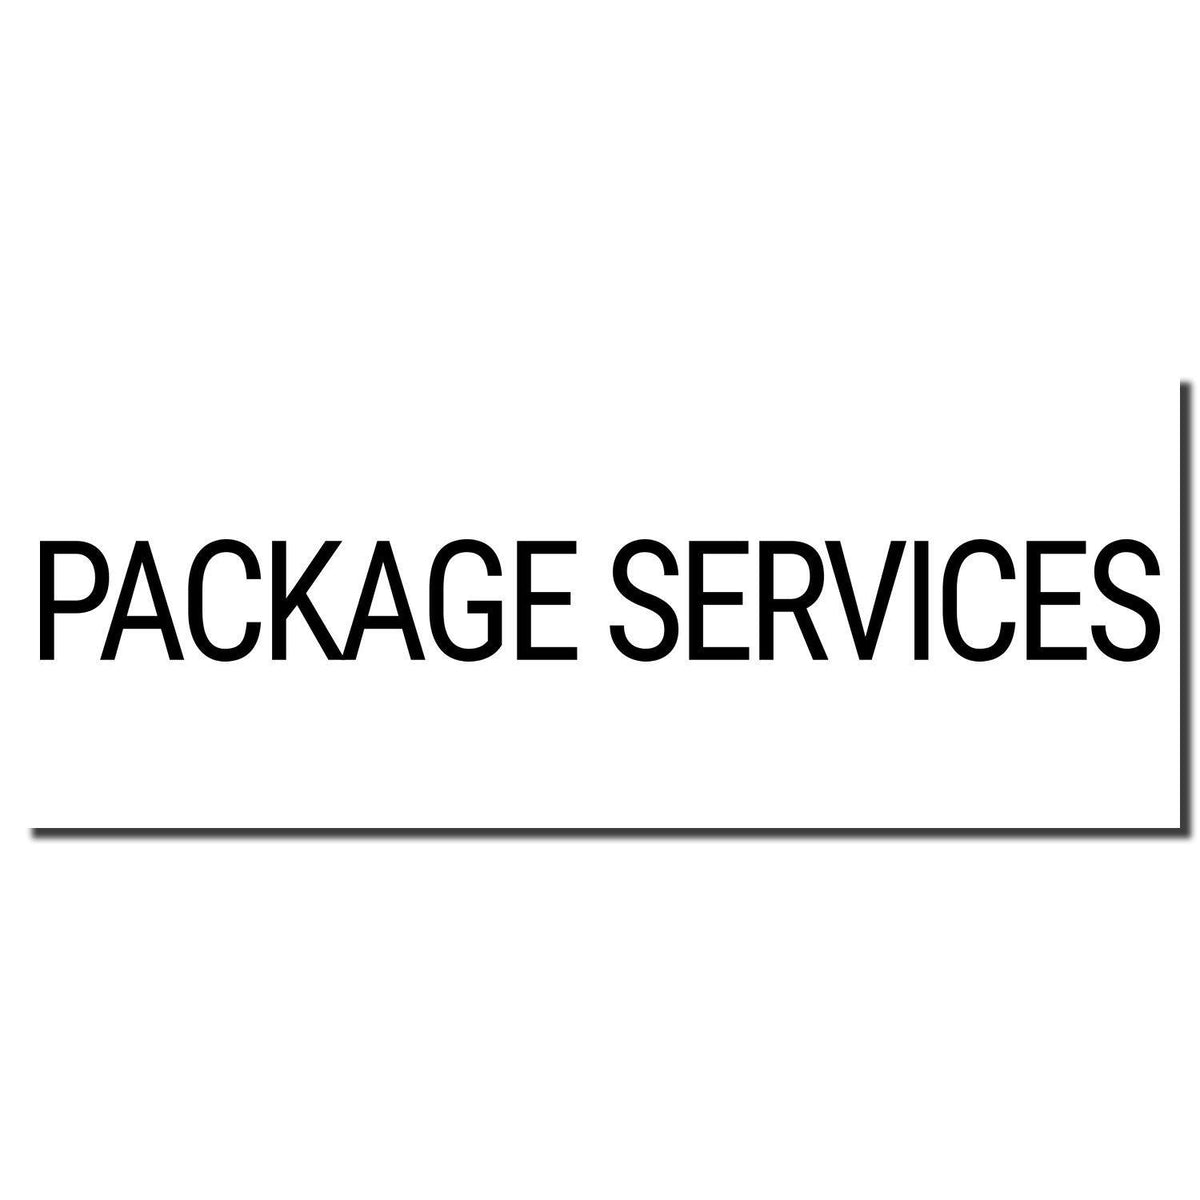 Enlarged Imprint Large Package Services Rubber Stamp Sample